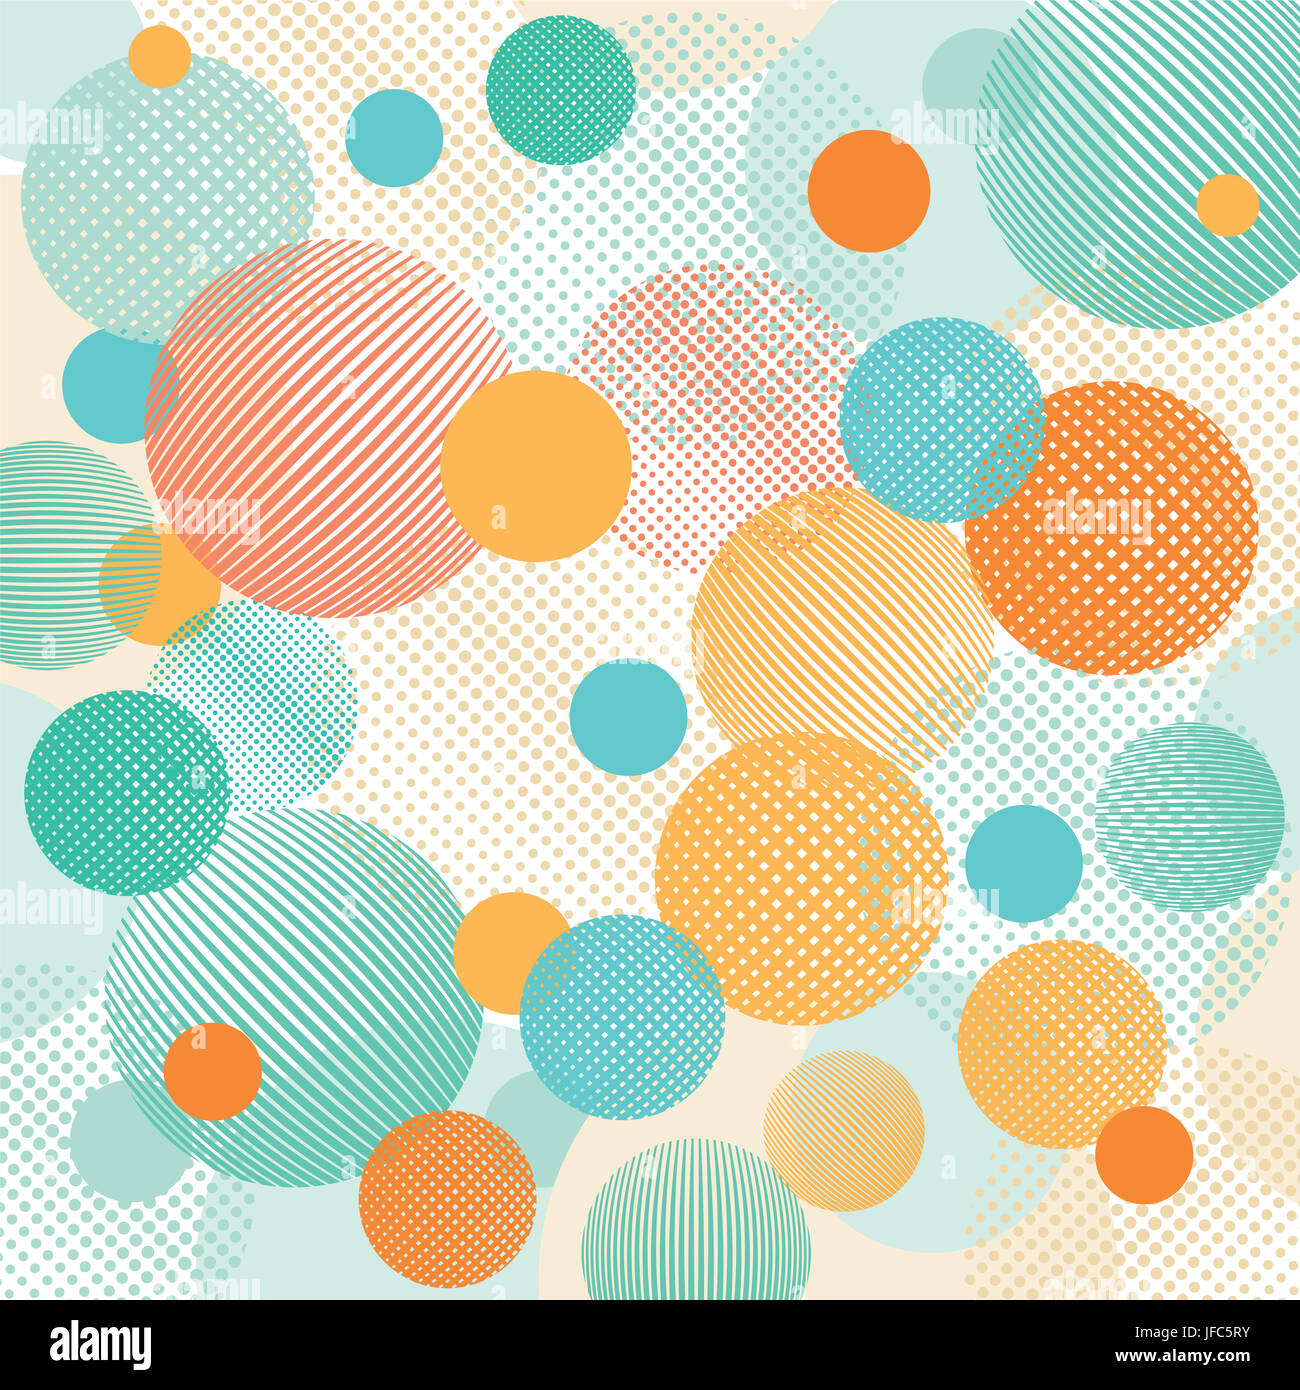 Geometric abstract dots illustration Stock Photo